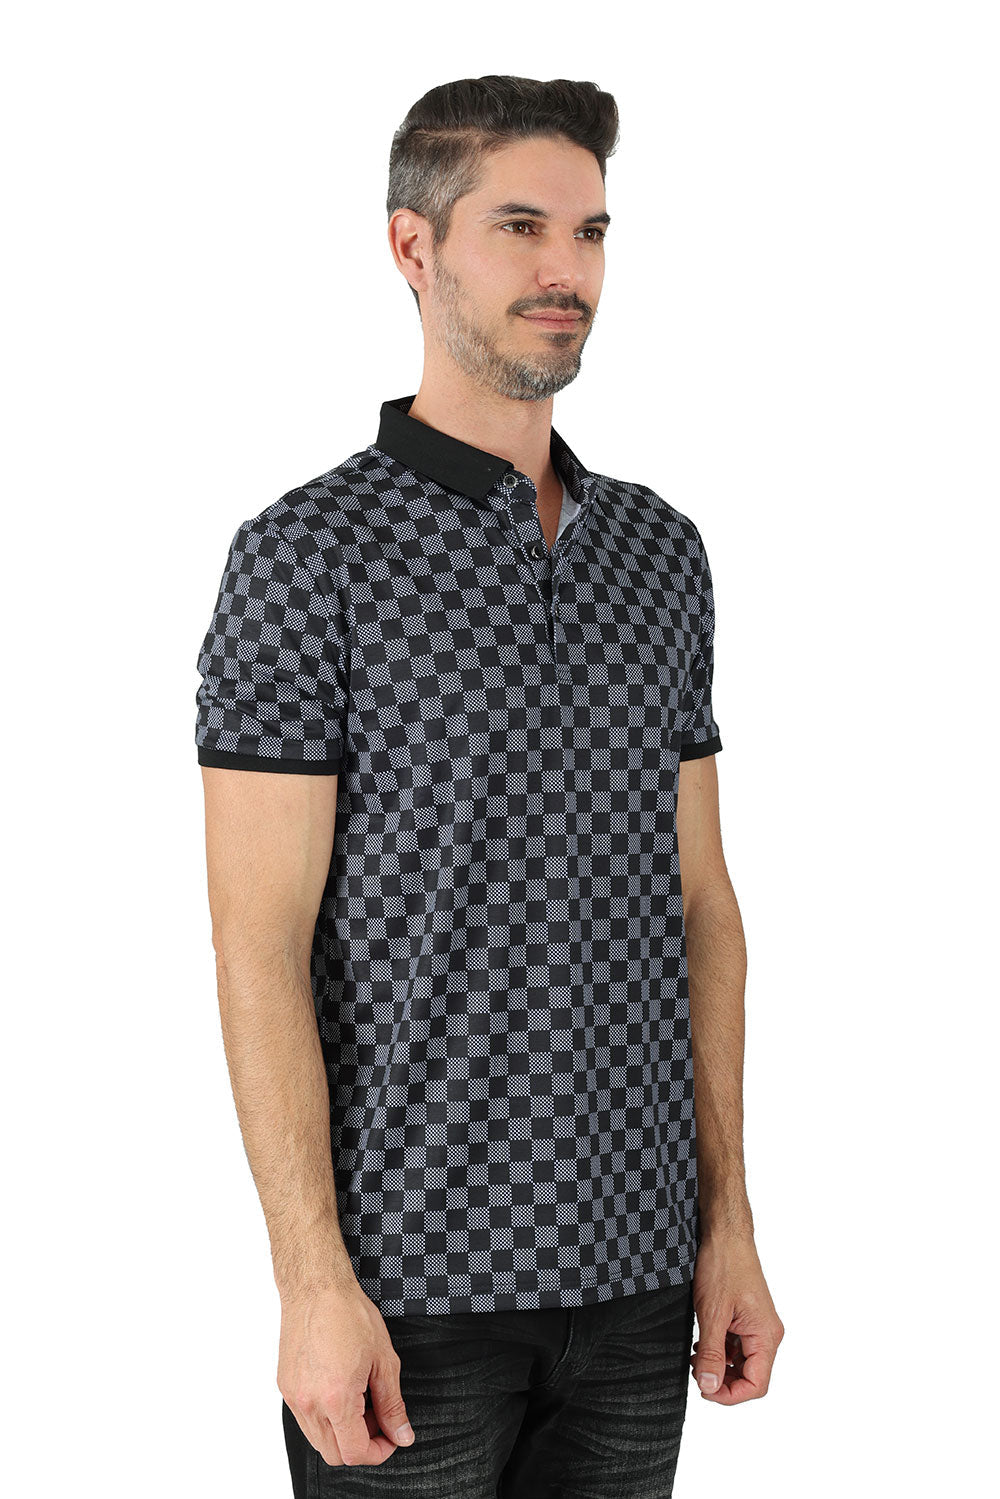 Vassari men's checkered plaid printed short-sleeve polo shirt PSV124Black